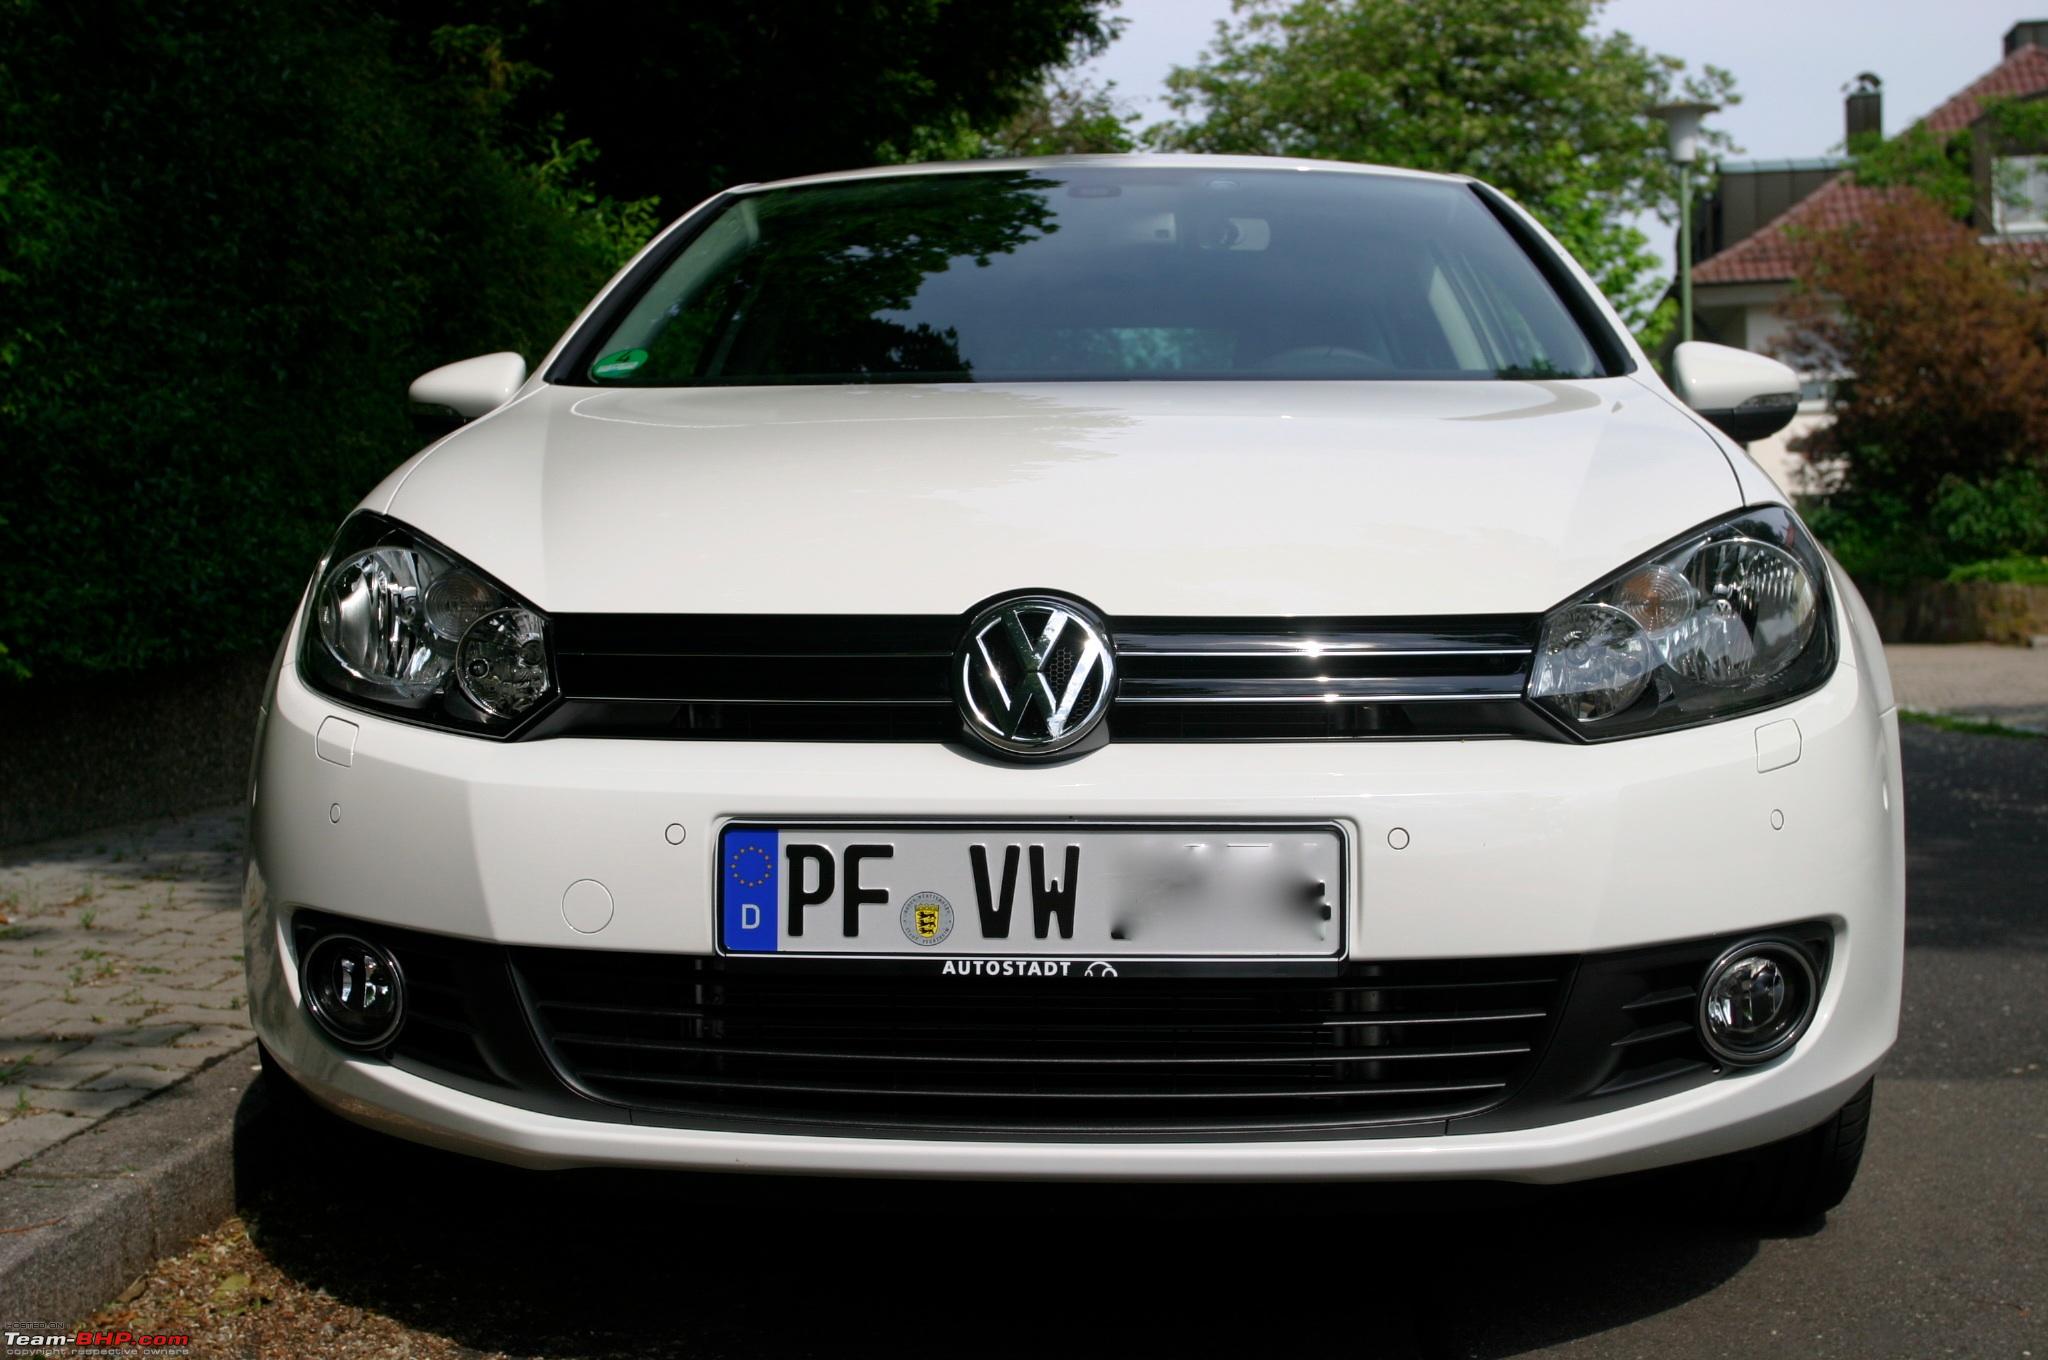 VW Golf VI: Initial Impressions & Pics - Team-BHP